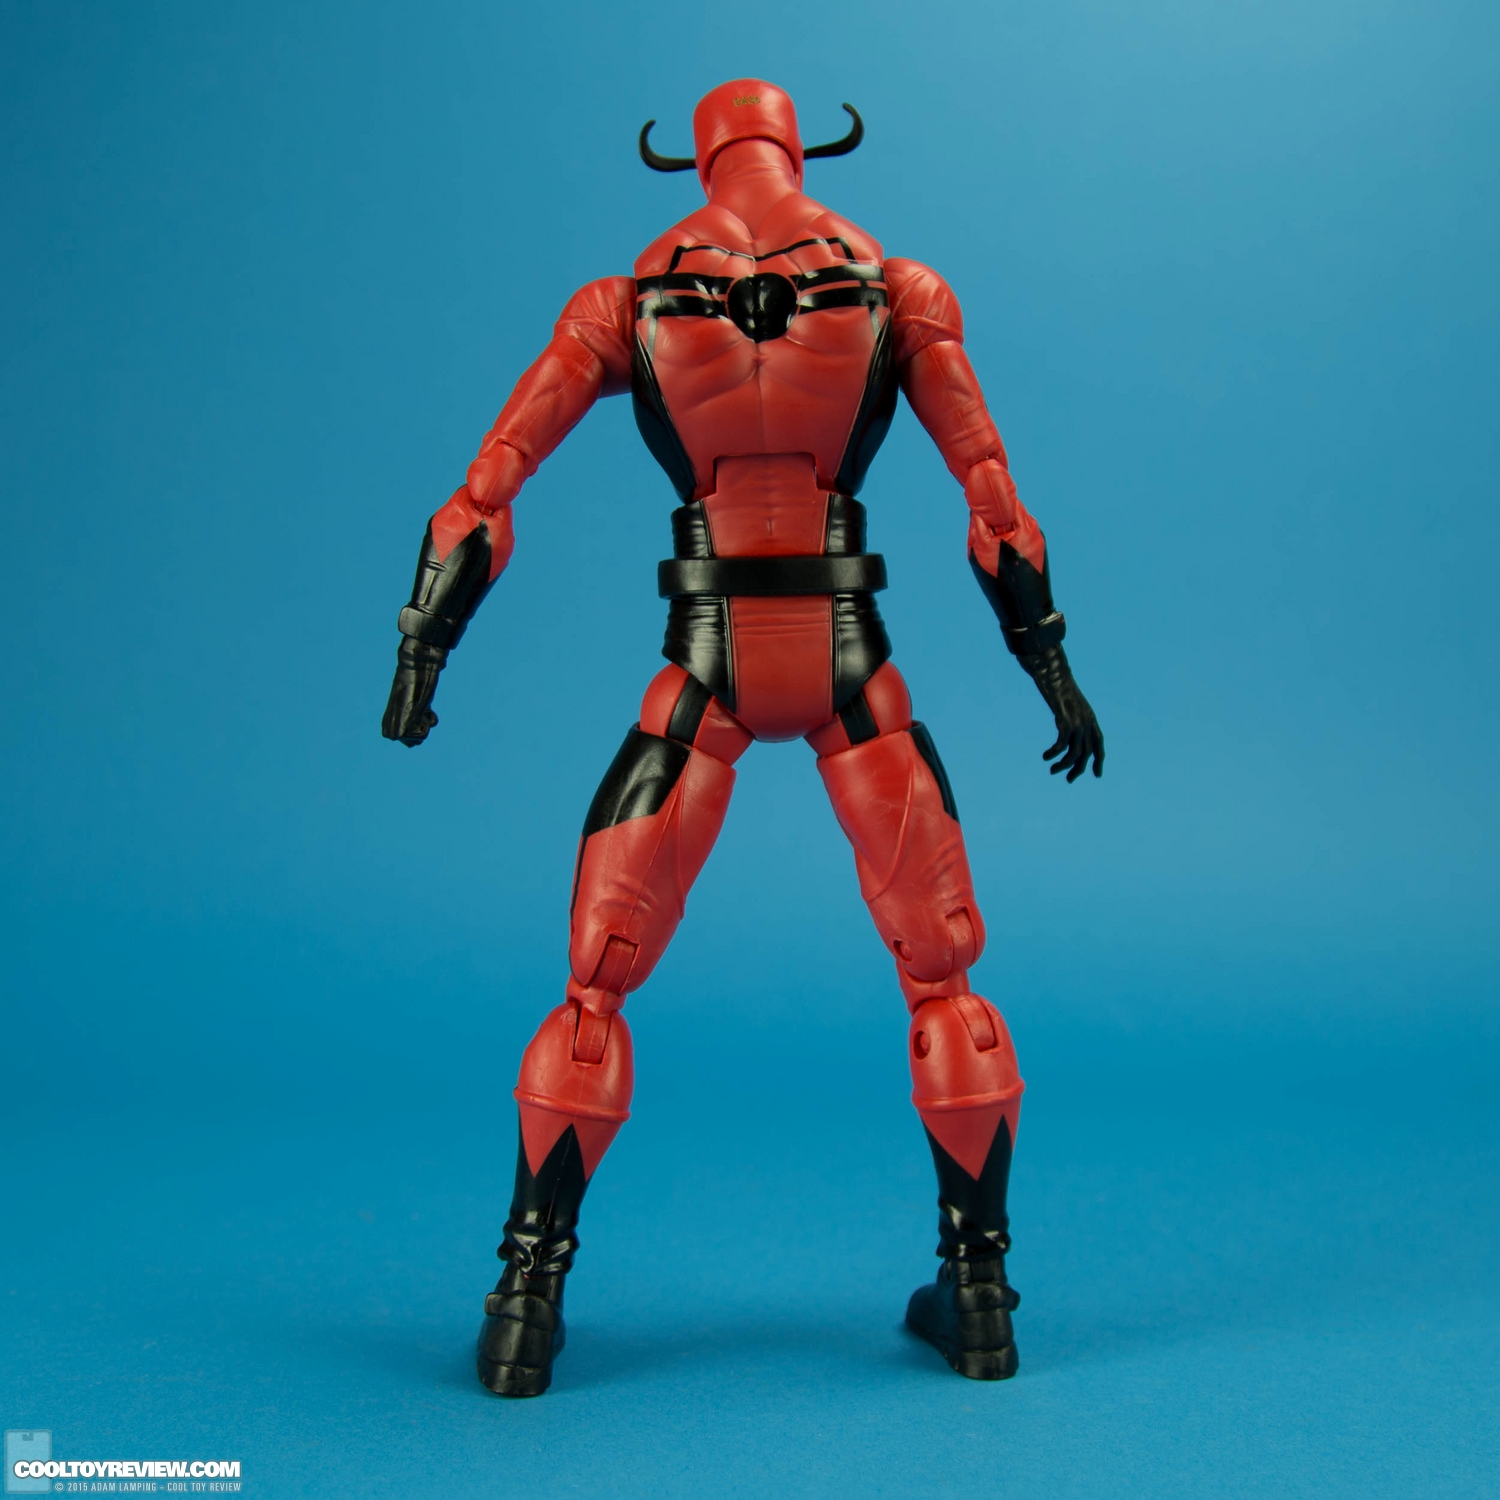 hasbro-deluxe-ant-man-set-san-diego-comic-con-2015-exclusive-004.jpg